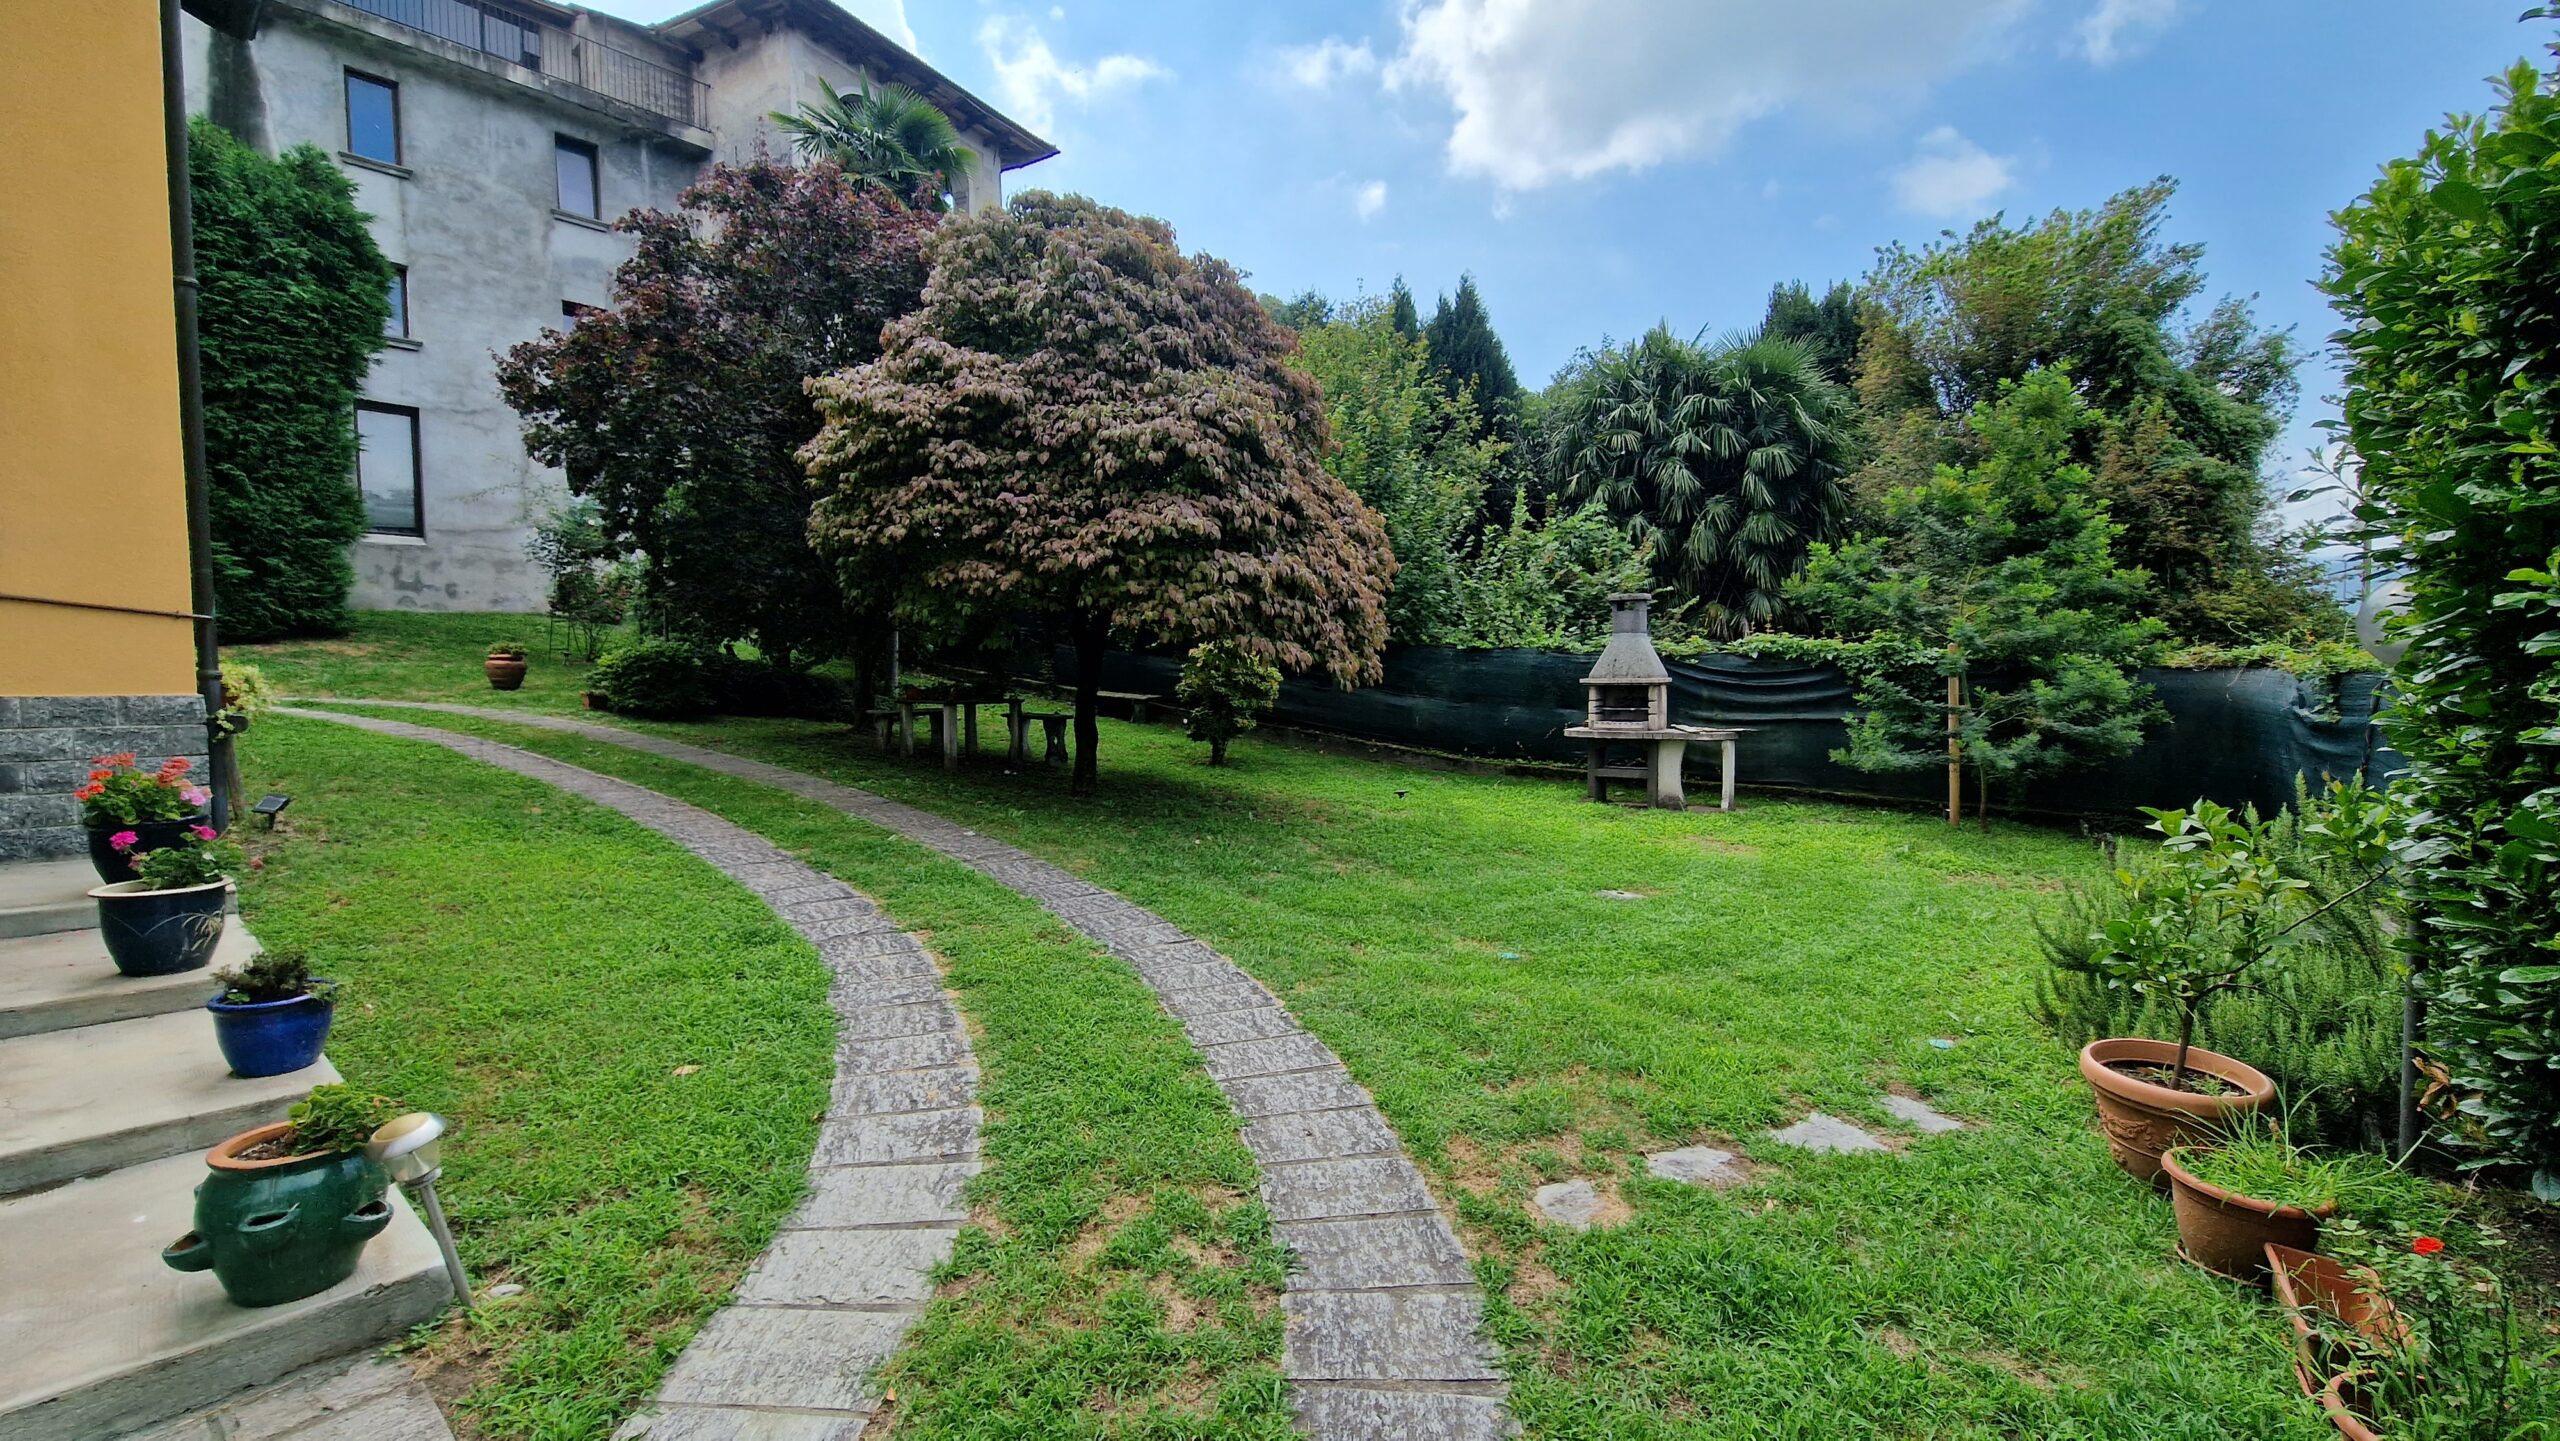 Foto Villa singola con giardino e vista lago